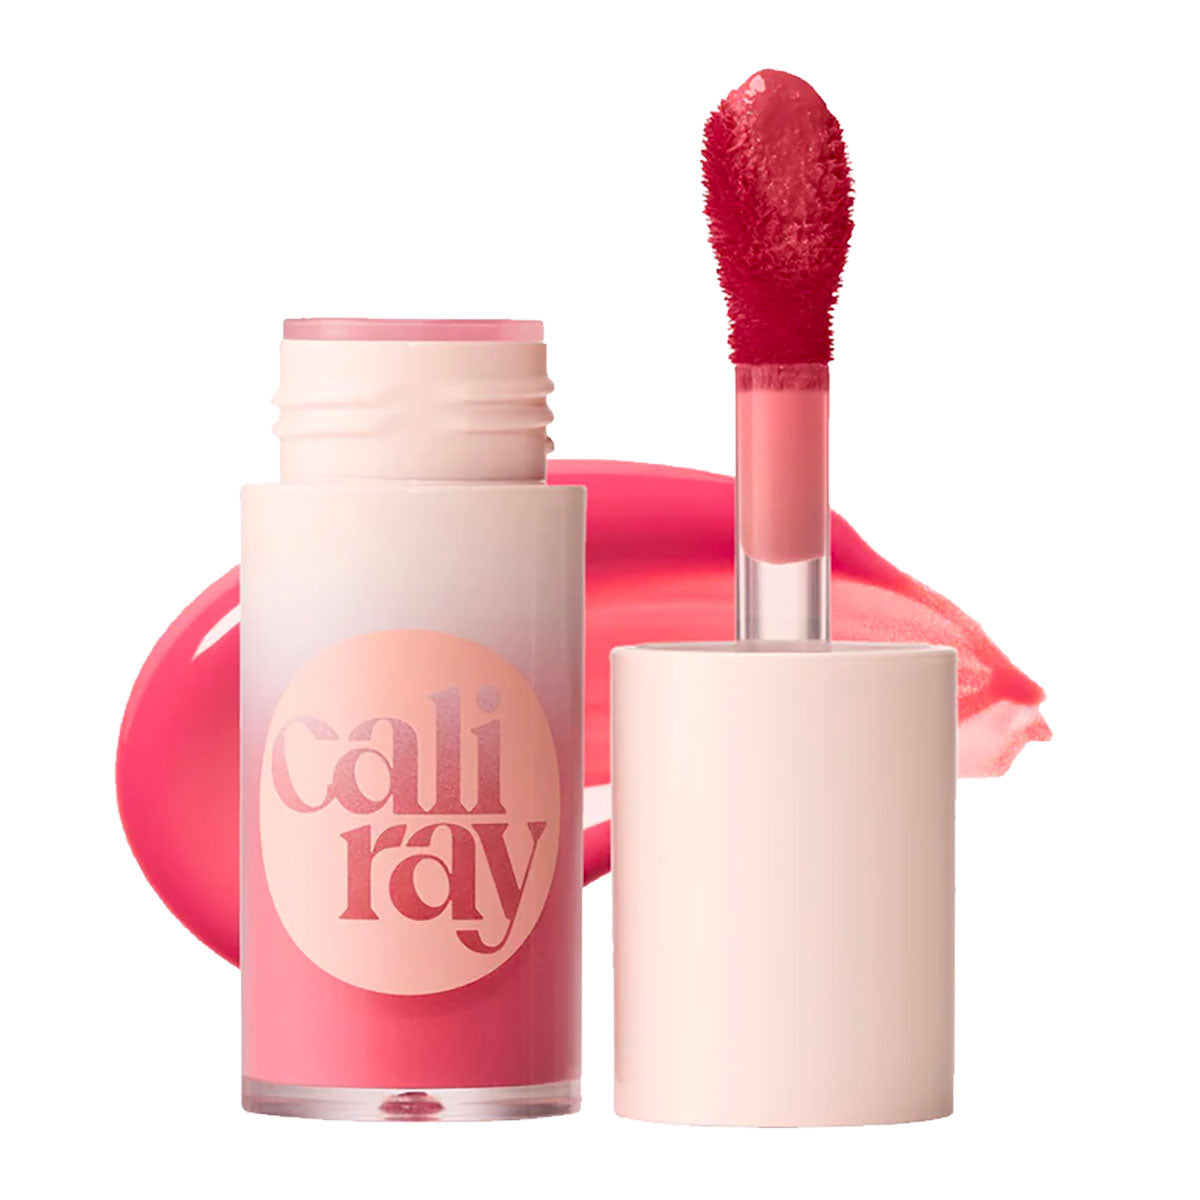 Caliray Socal Superbloom Lip + Cheek Tint Soft Stain Blush | Wild Flower